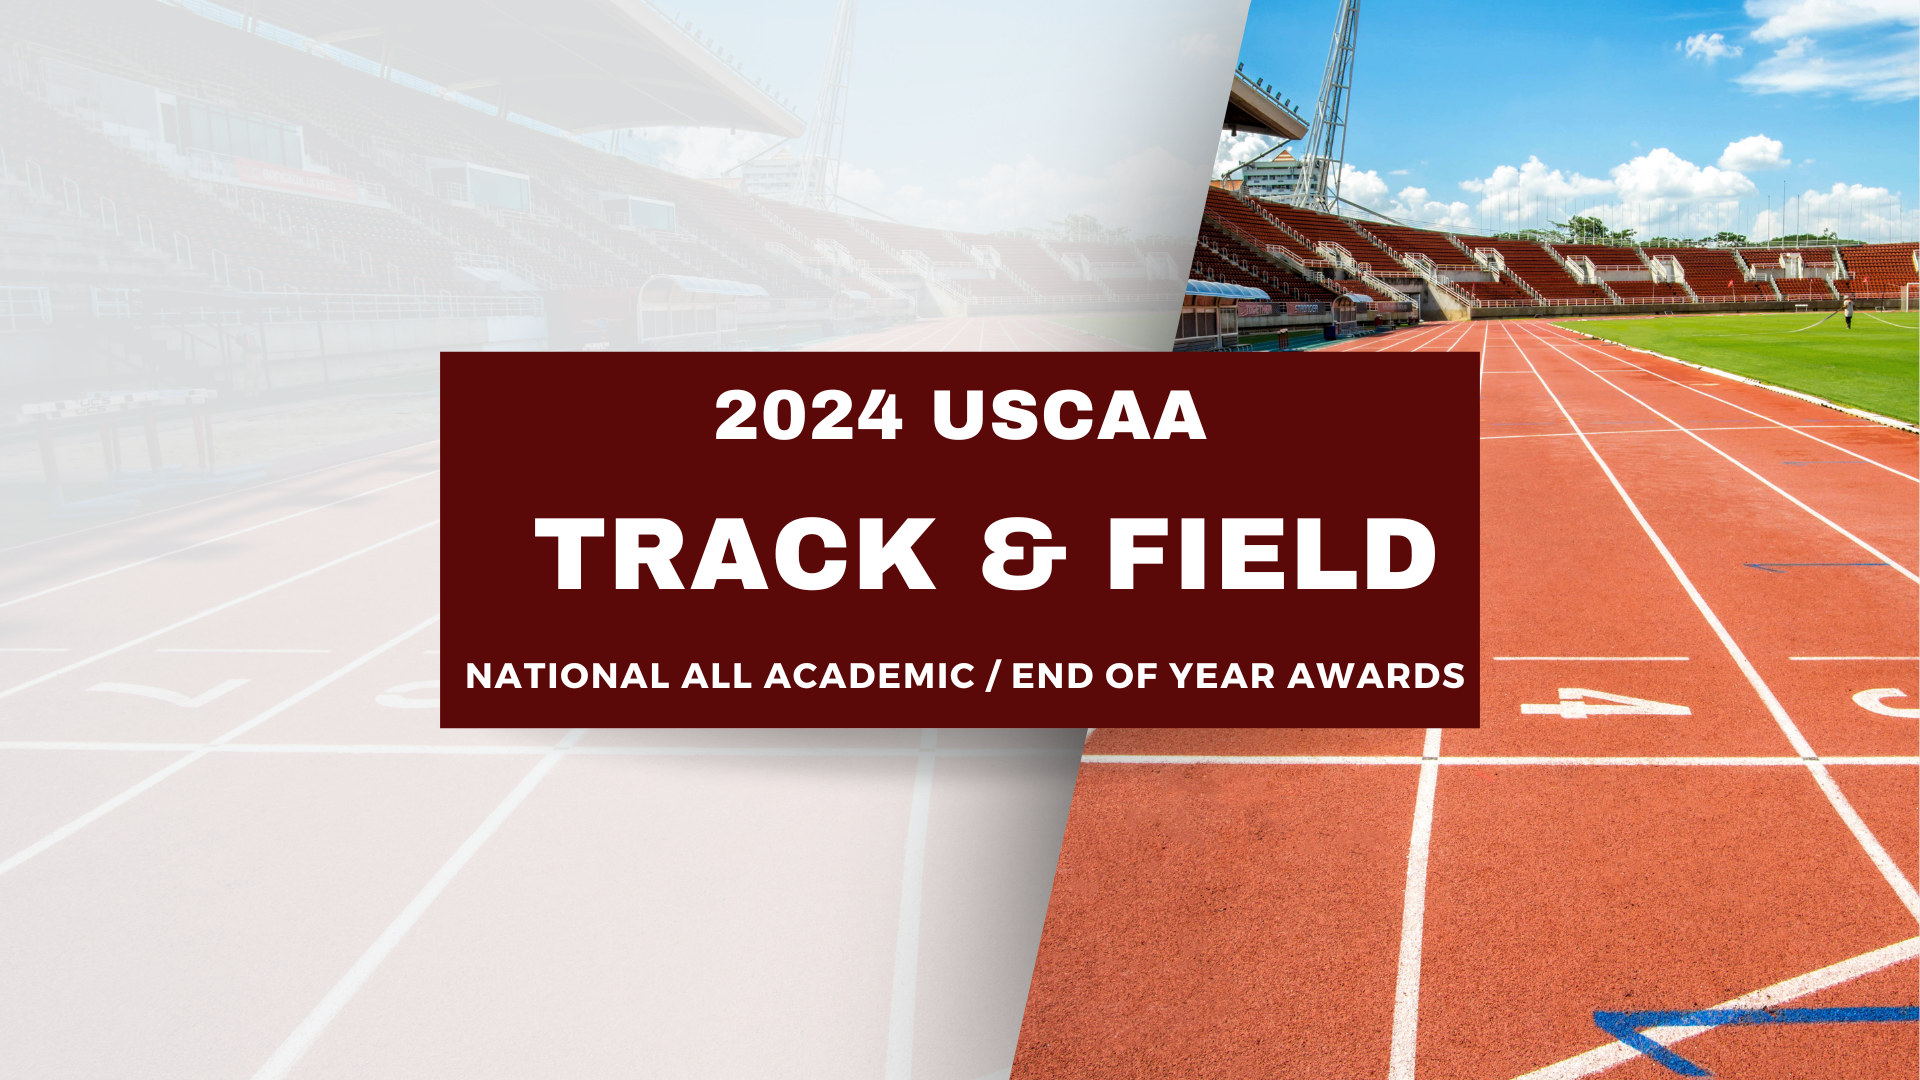 USCAA Announces Track & Field National All-Academic Awards